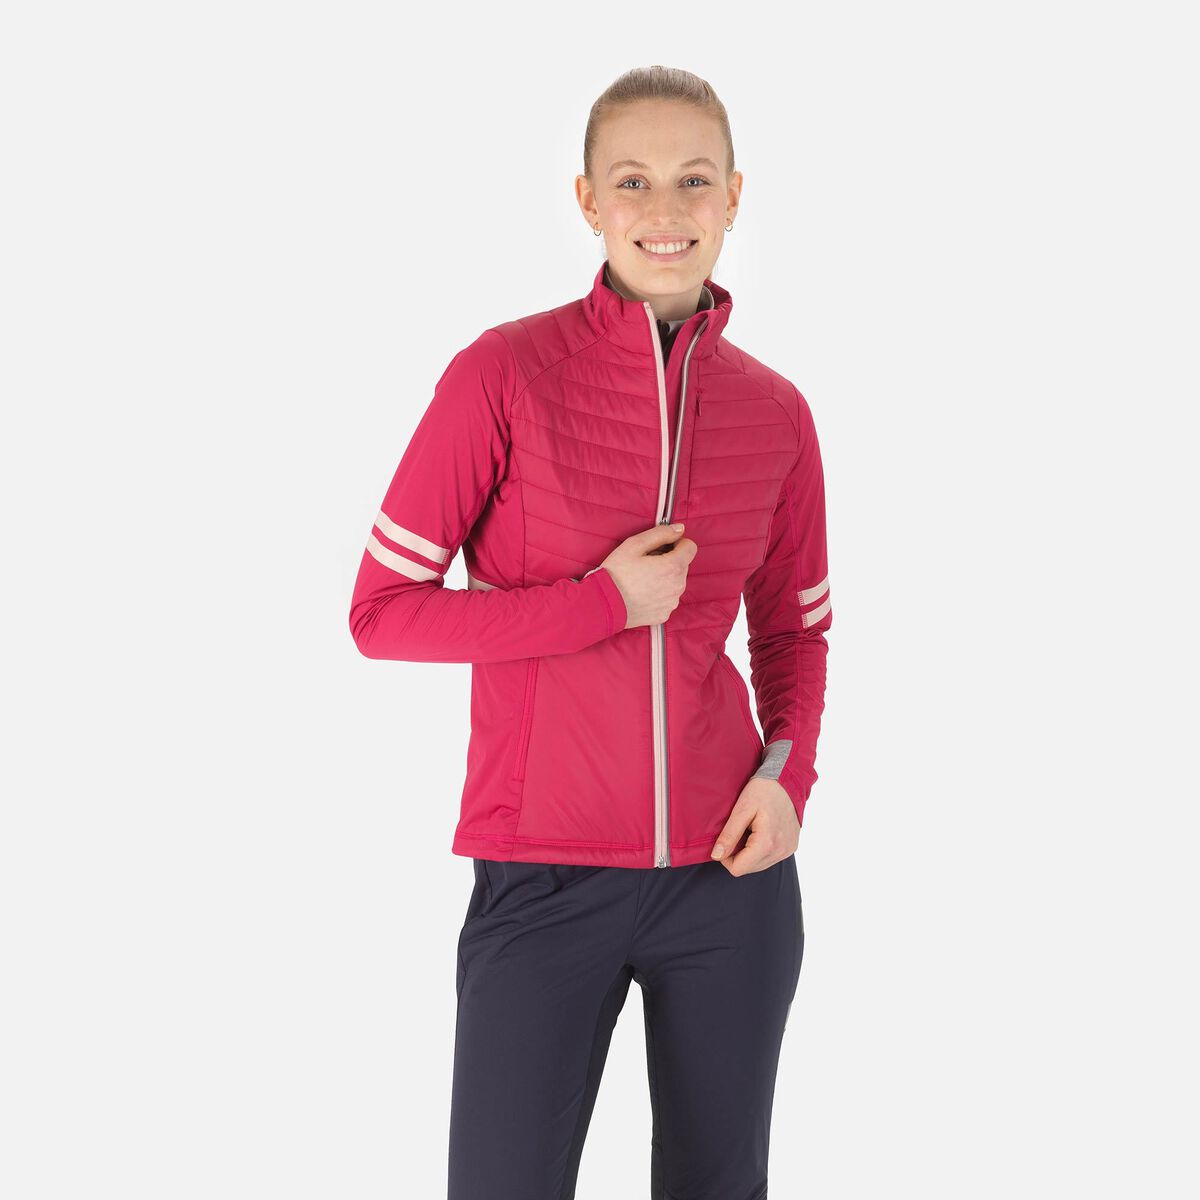 Rossignol Women's Poursuite Warm nordic ski jacket Pink/Purple